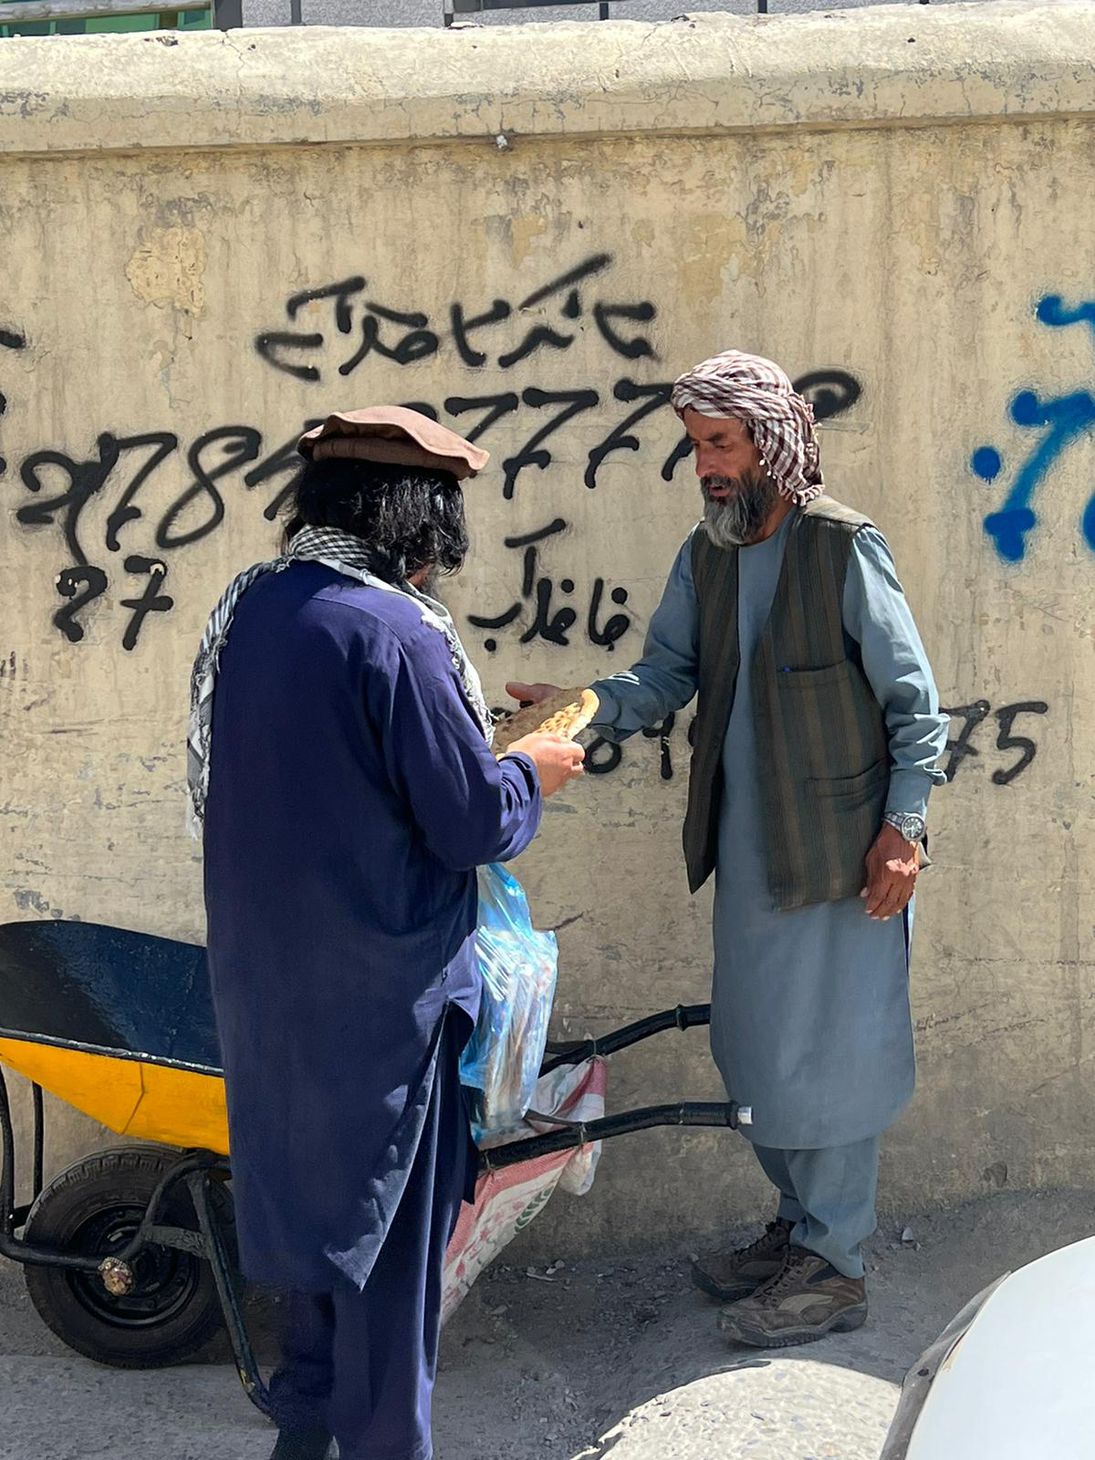 Two men one in purple hands hemp bread to man in blue background wall has Afghanistan grafiti.